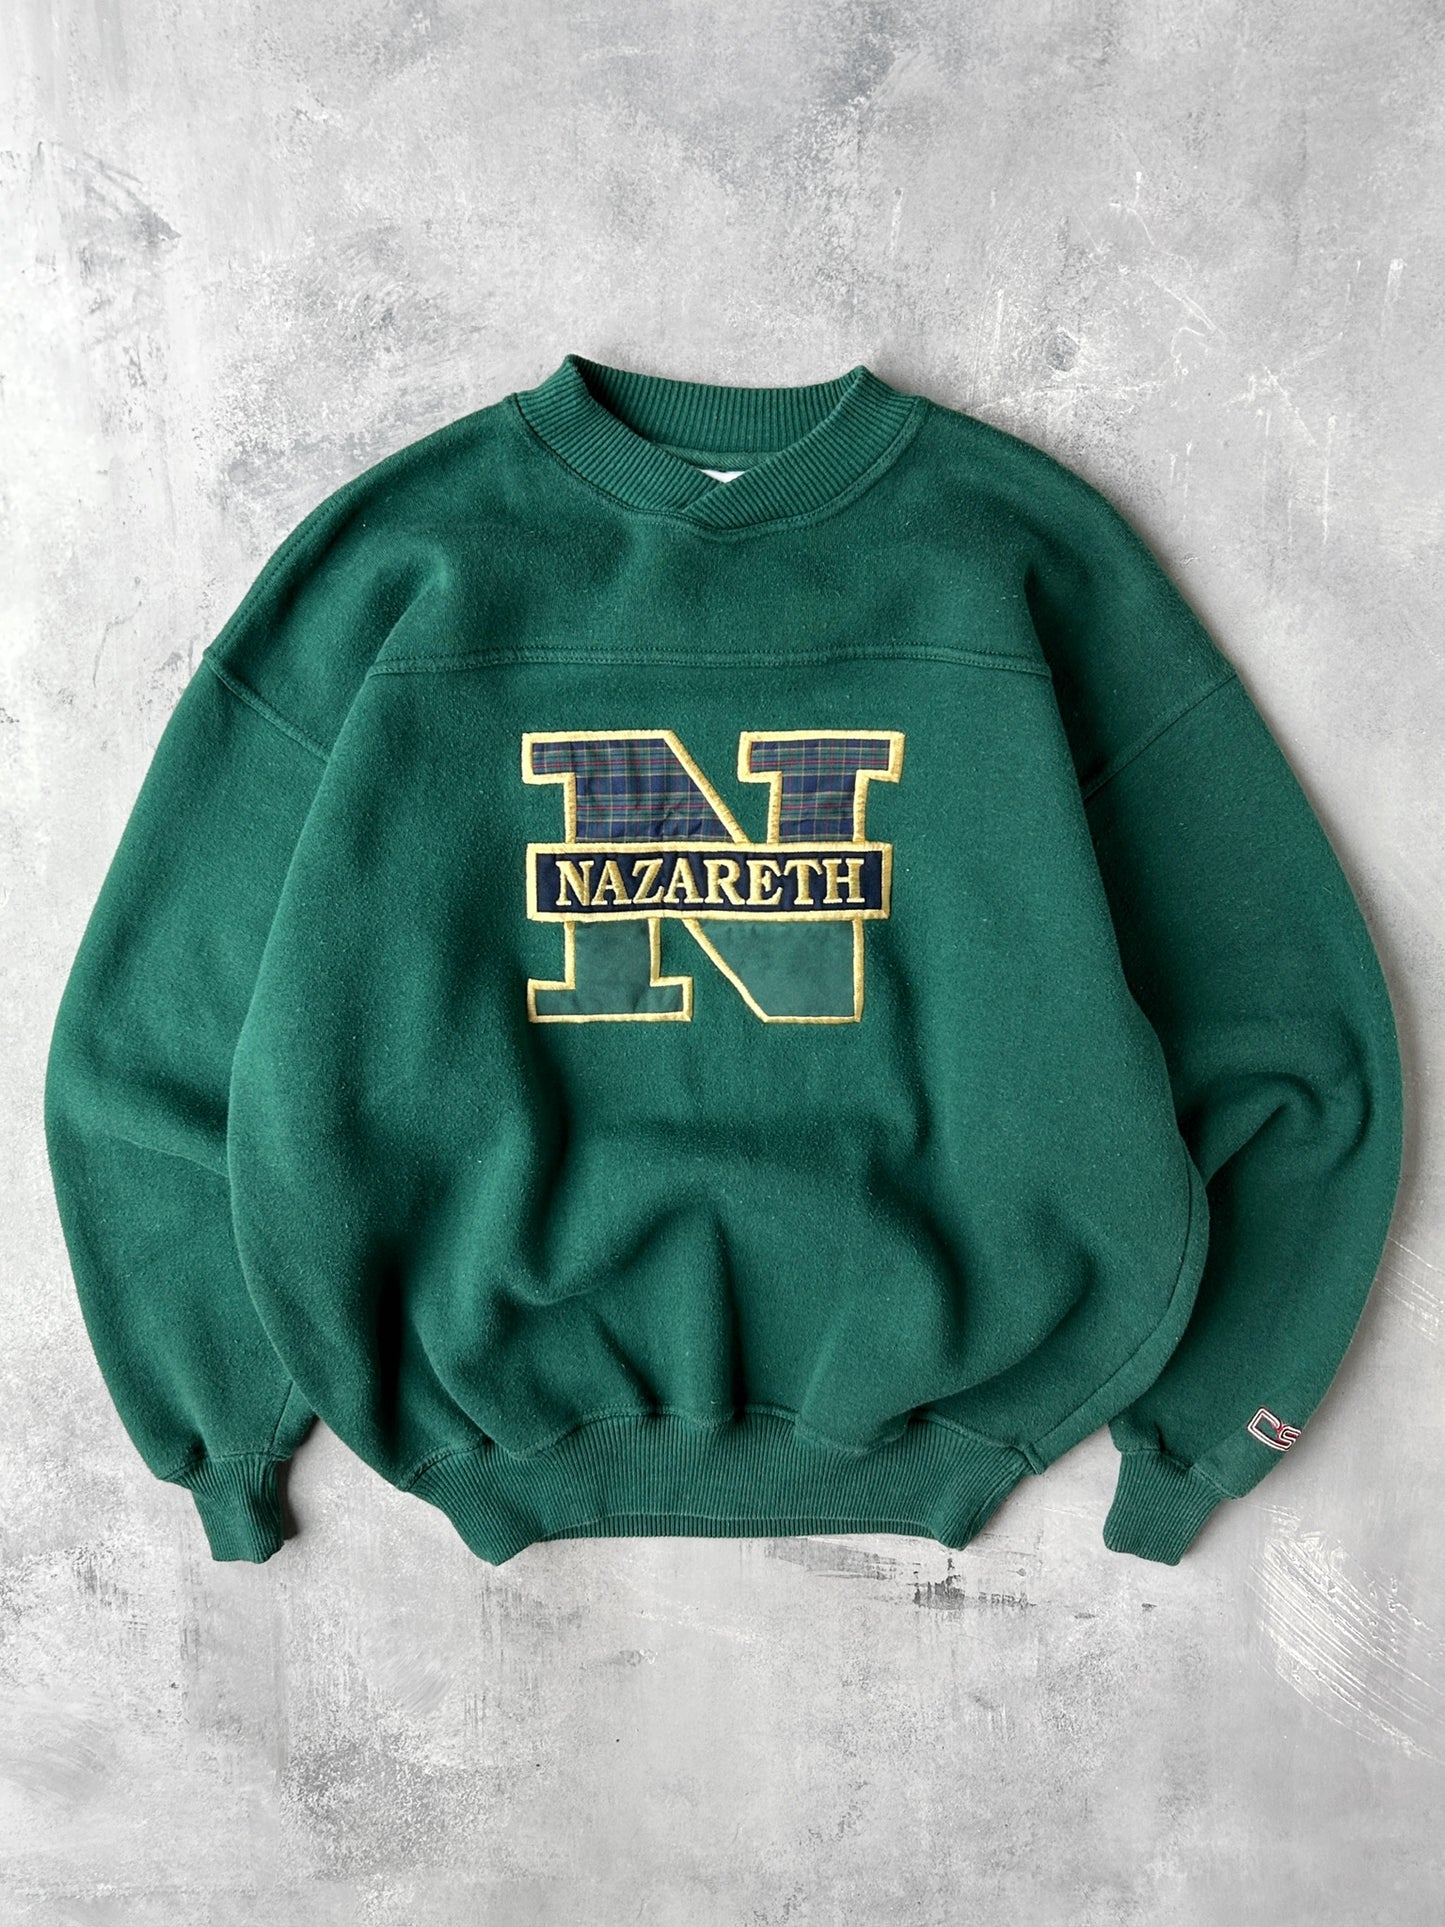 Nazareth University Sweatshirt 90's - Large